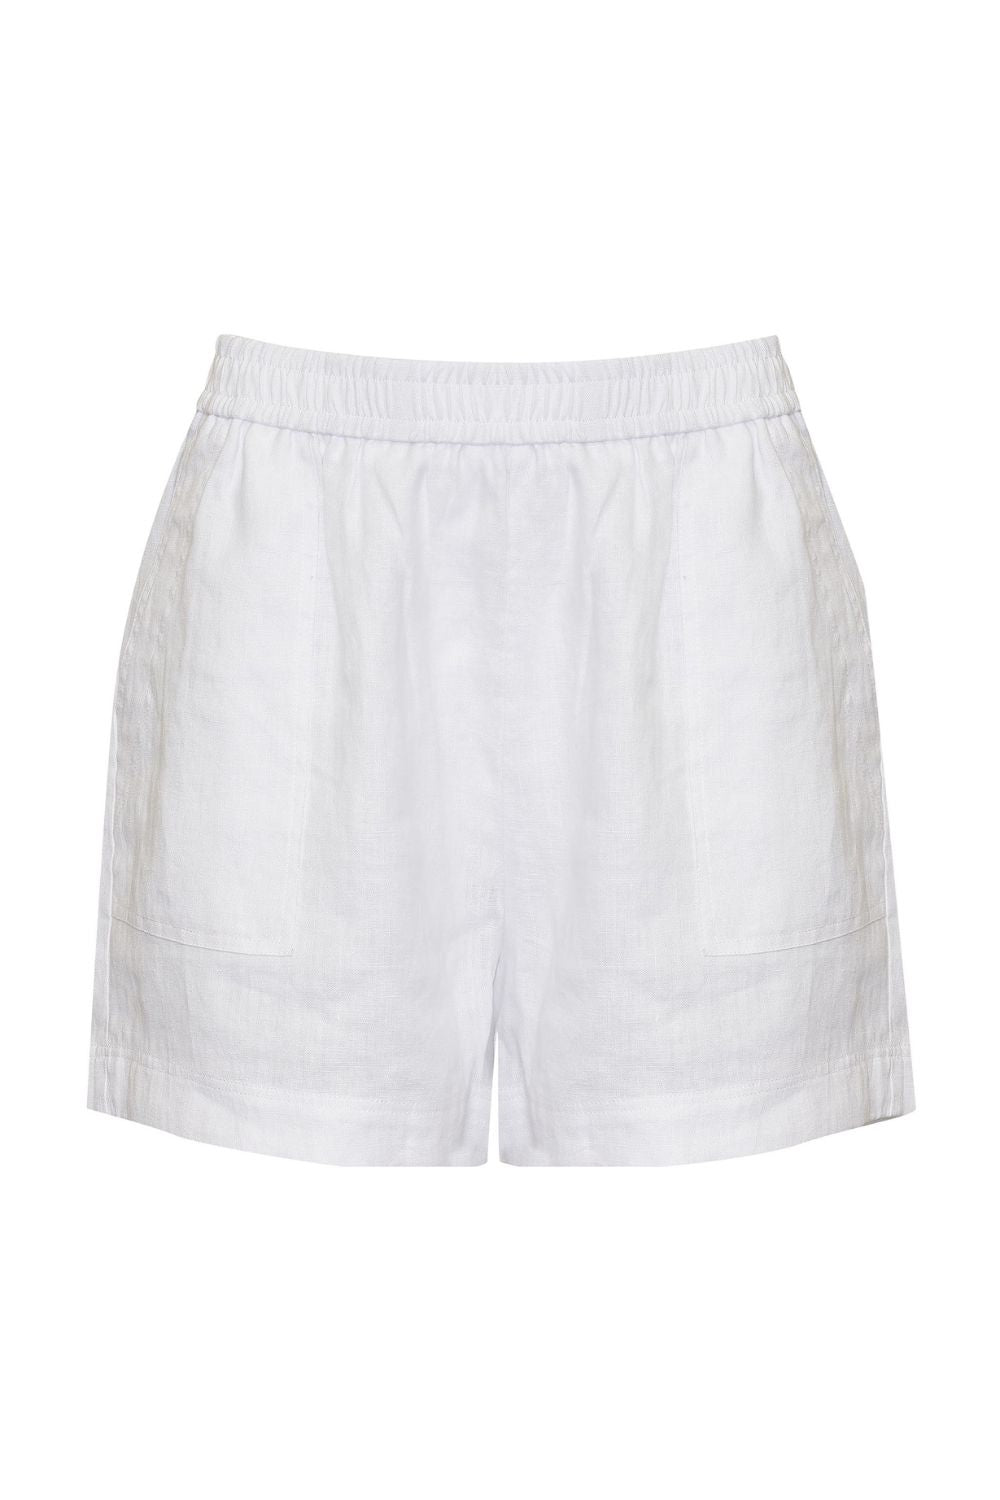 white, shorts, elasticated waist, side pockets, top stitching, product image